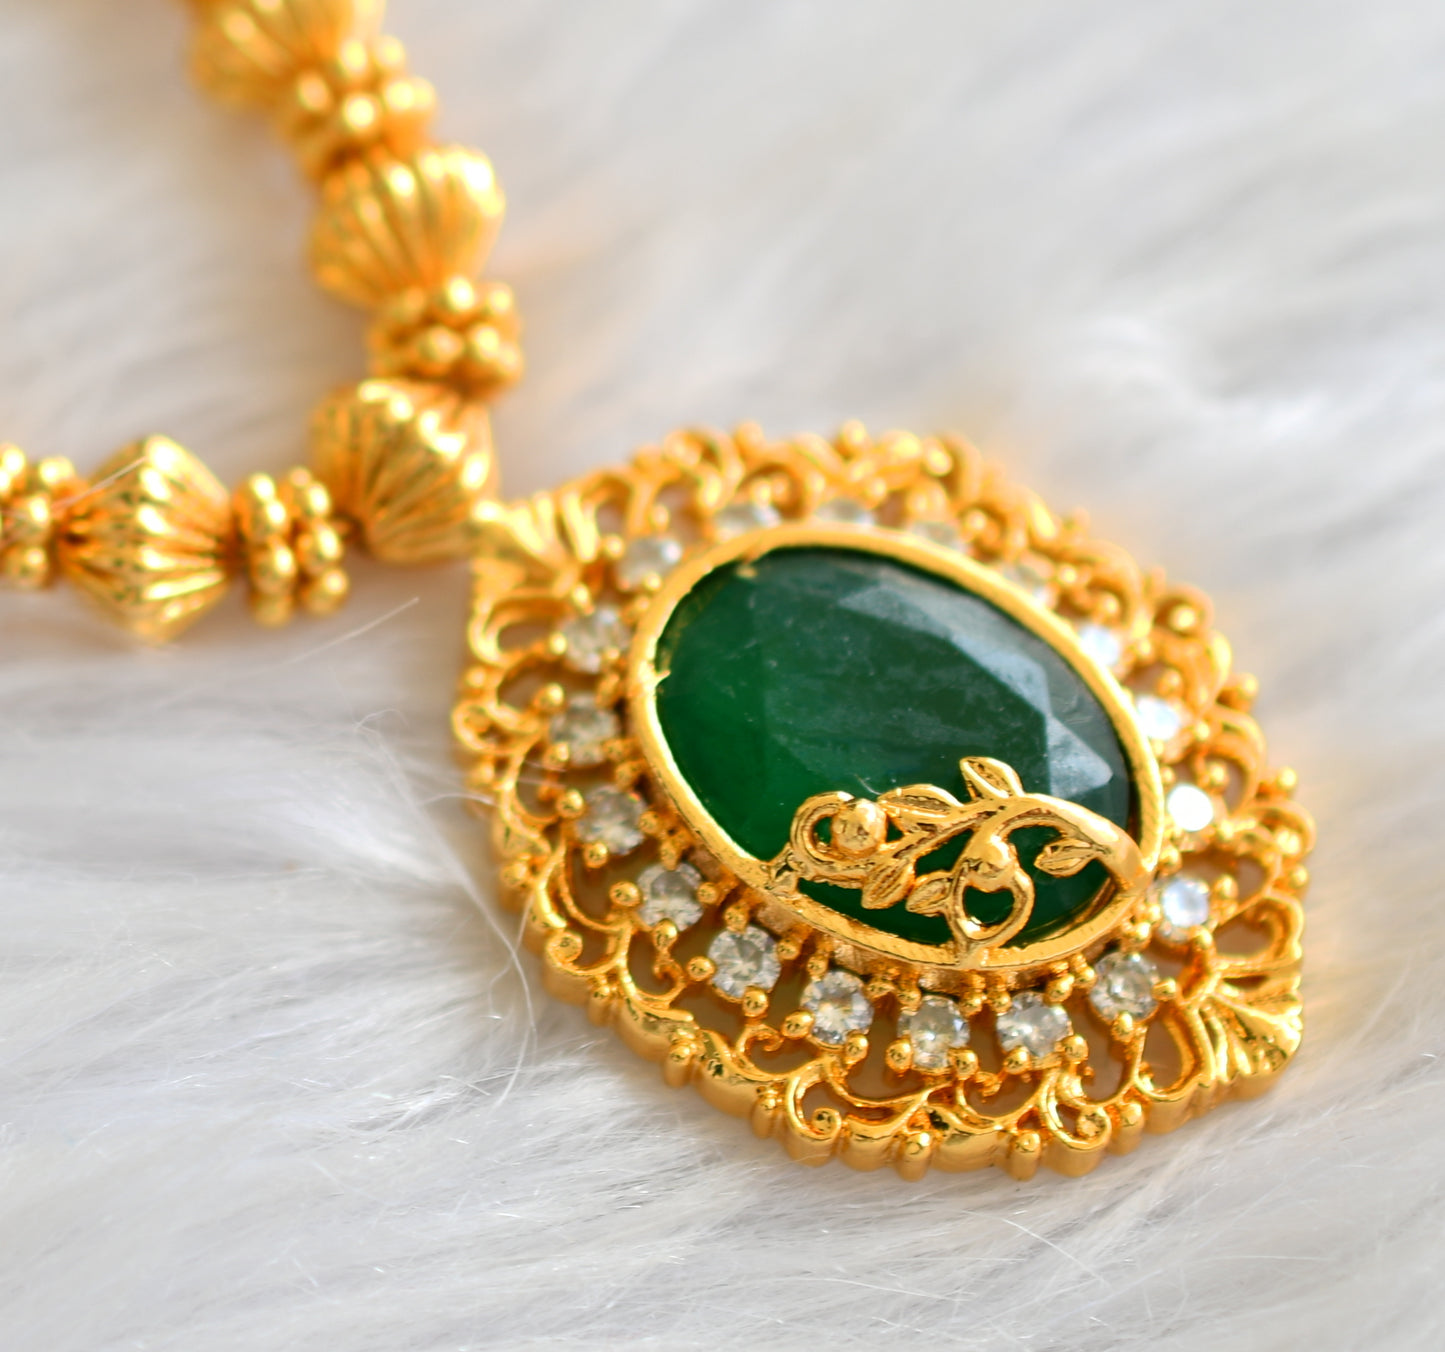 Gold tone cz white-green oval necklace dj-43264